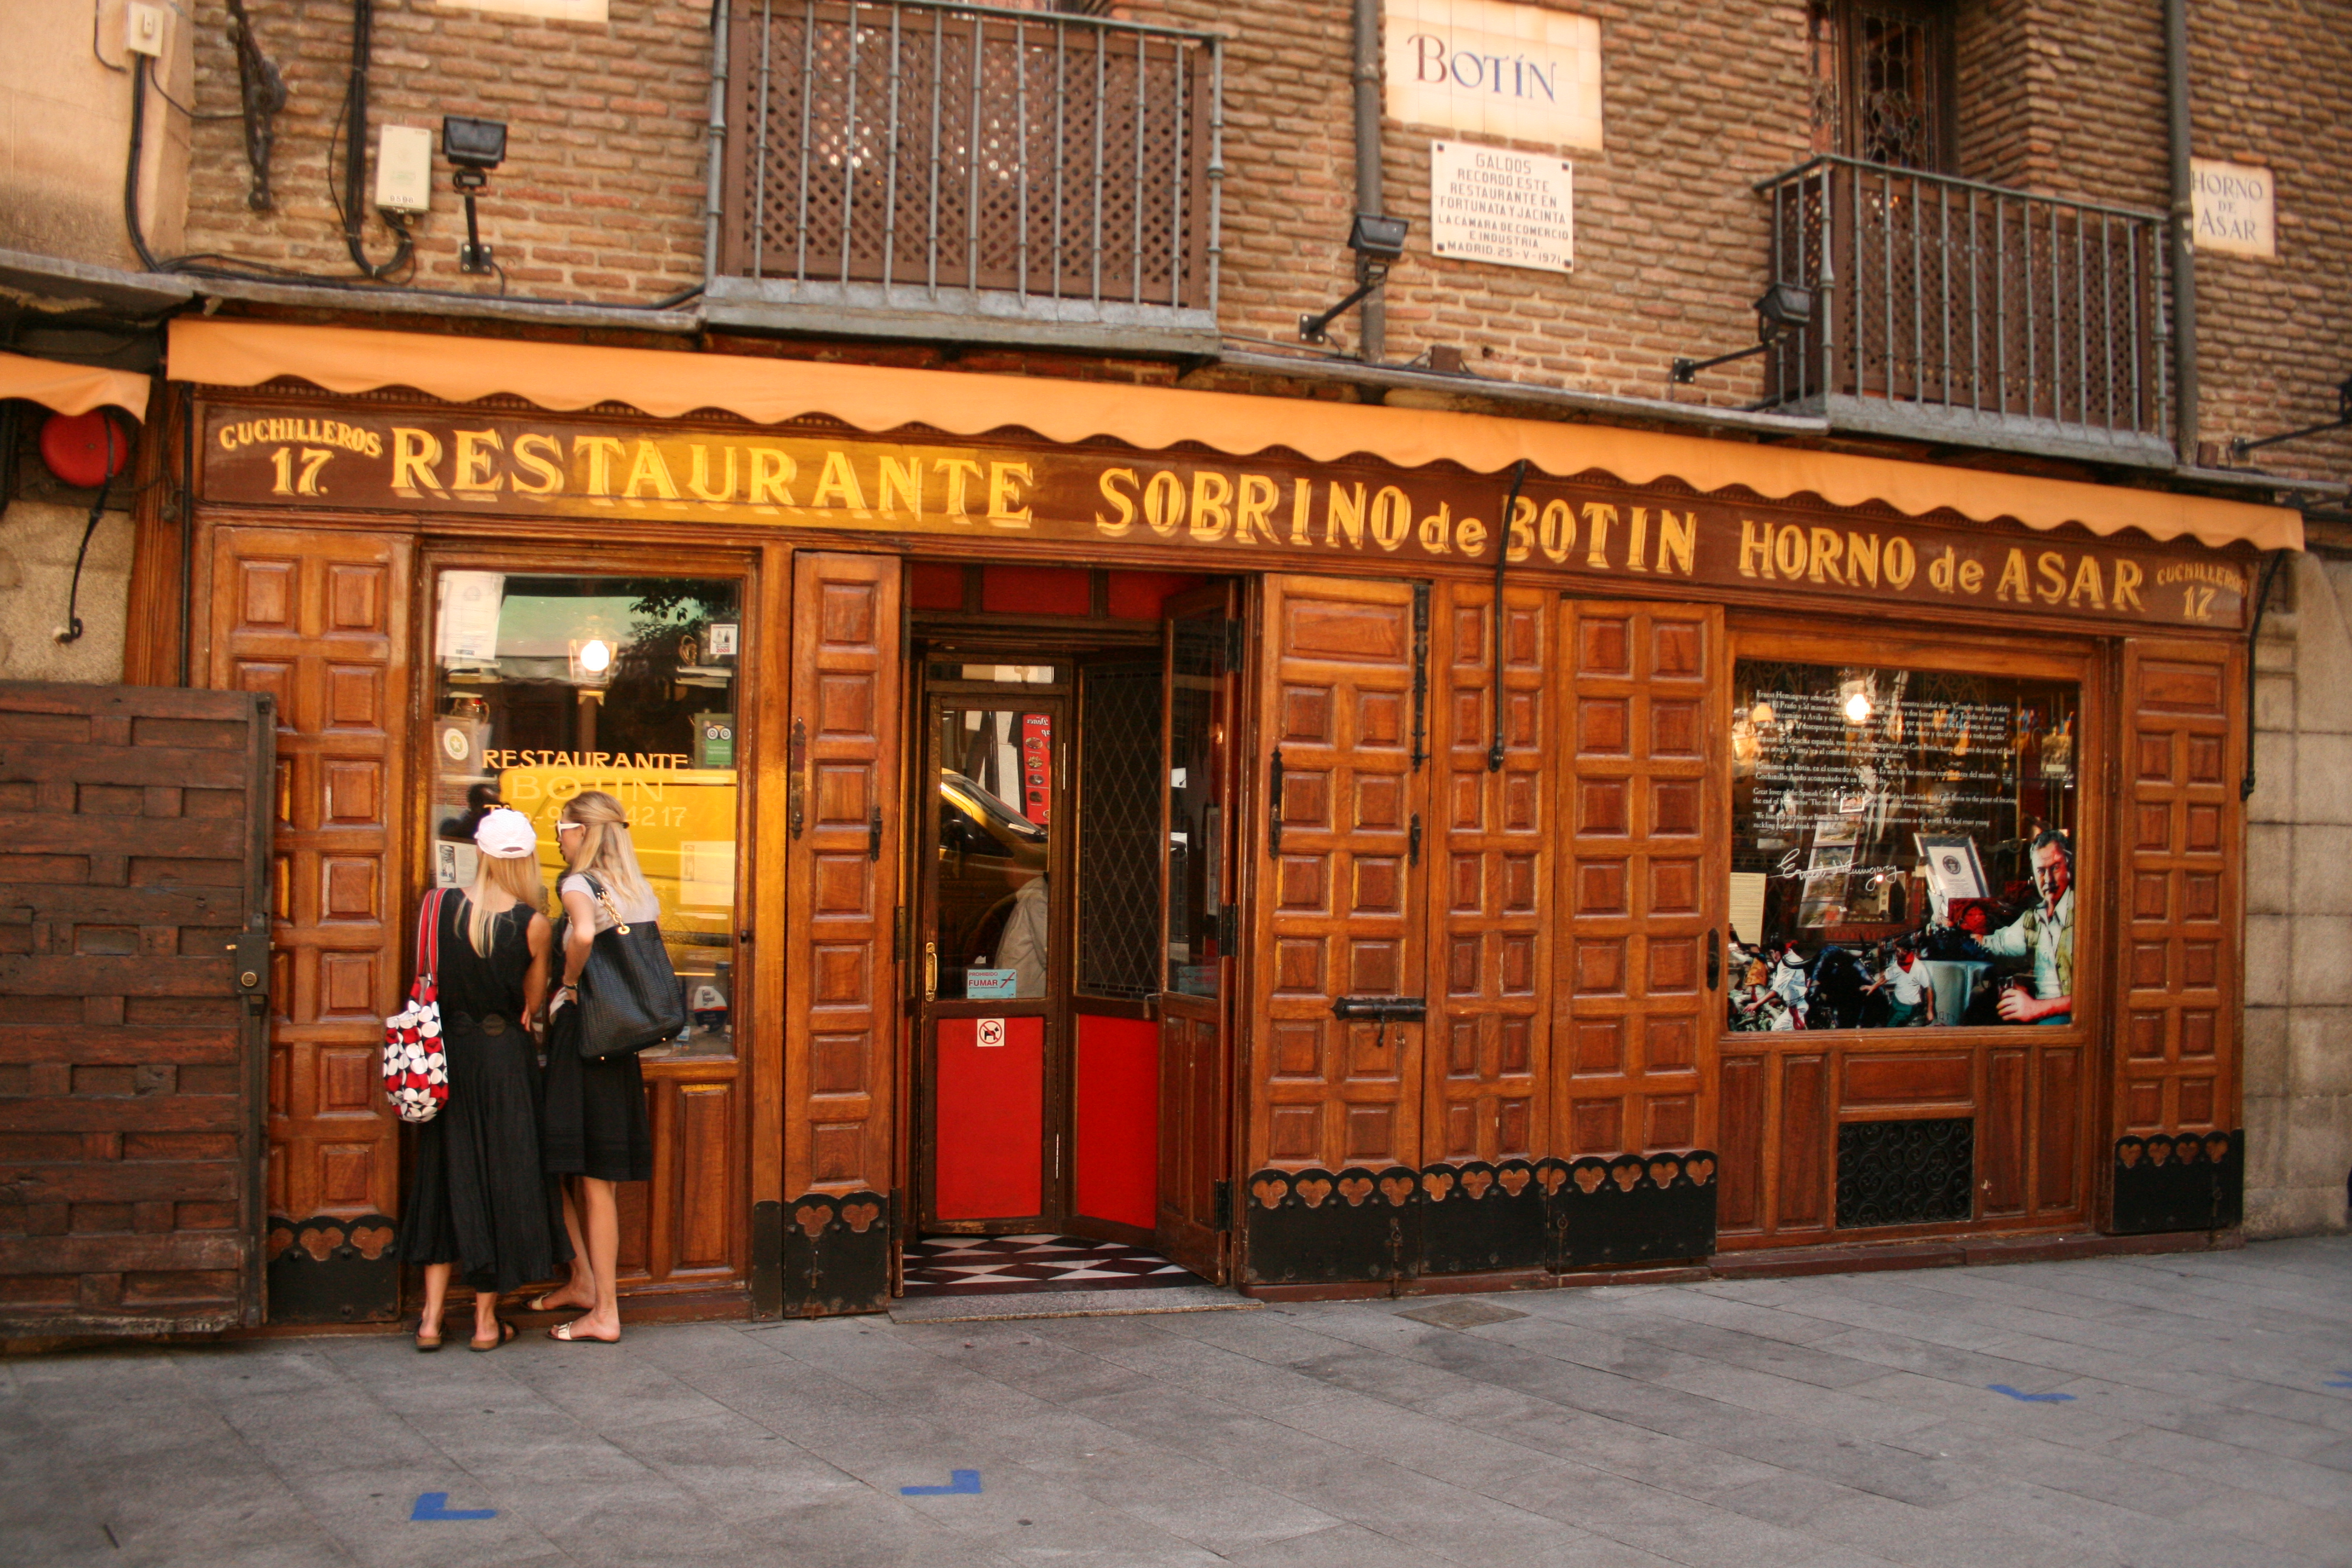 casa bot n the oldest restaurant in the world shmadrid